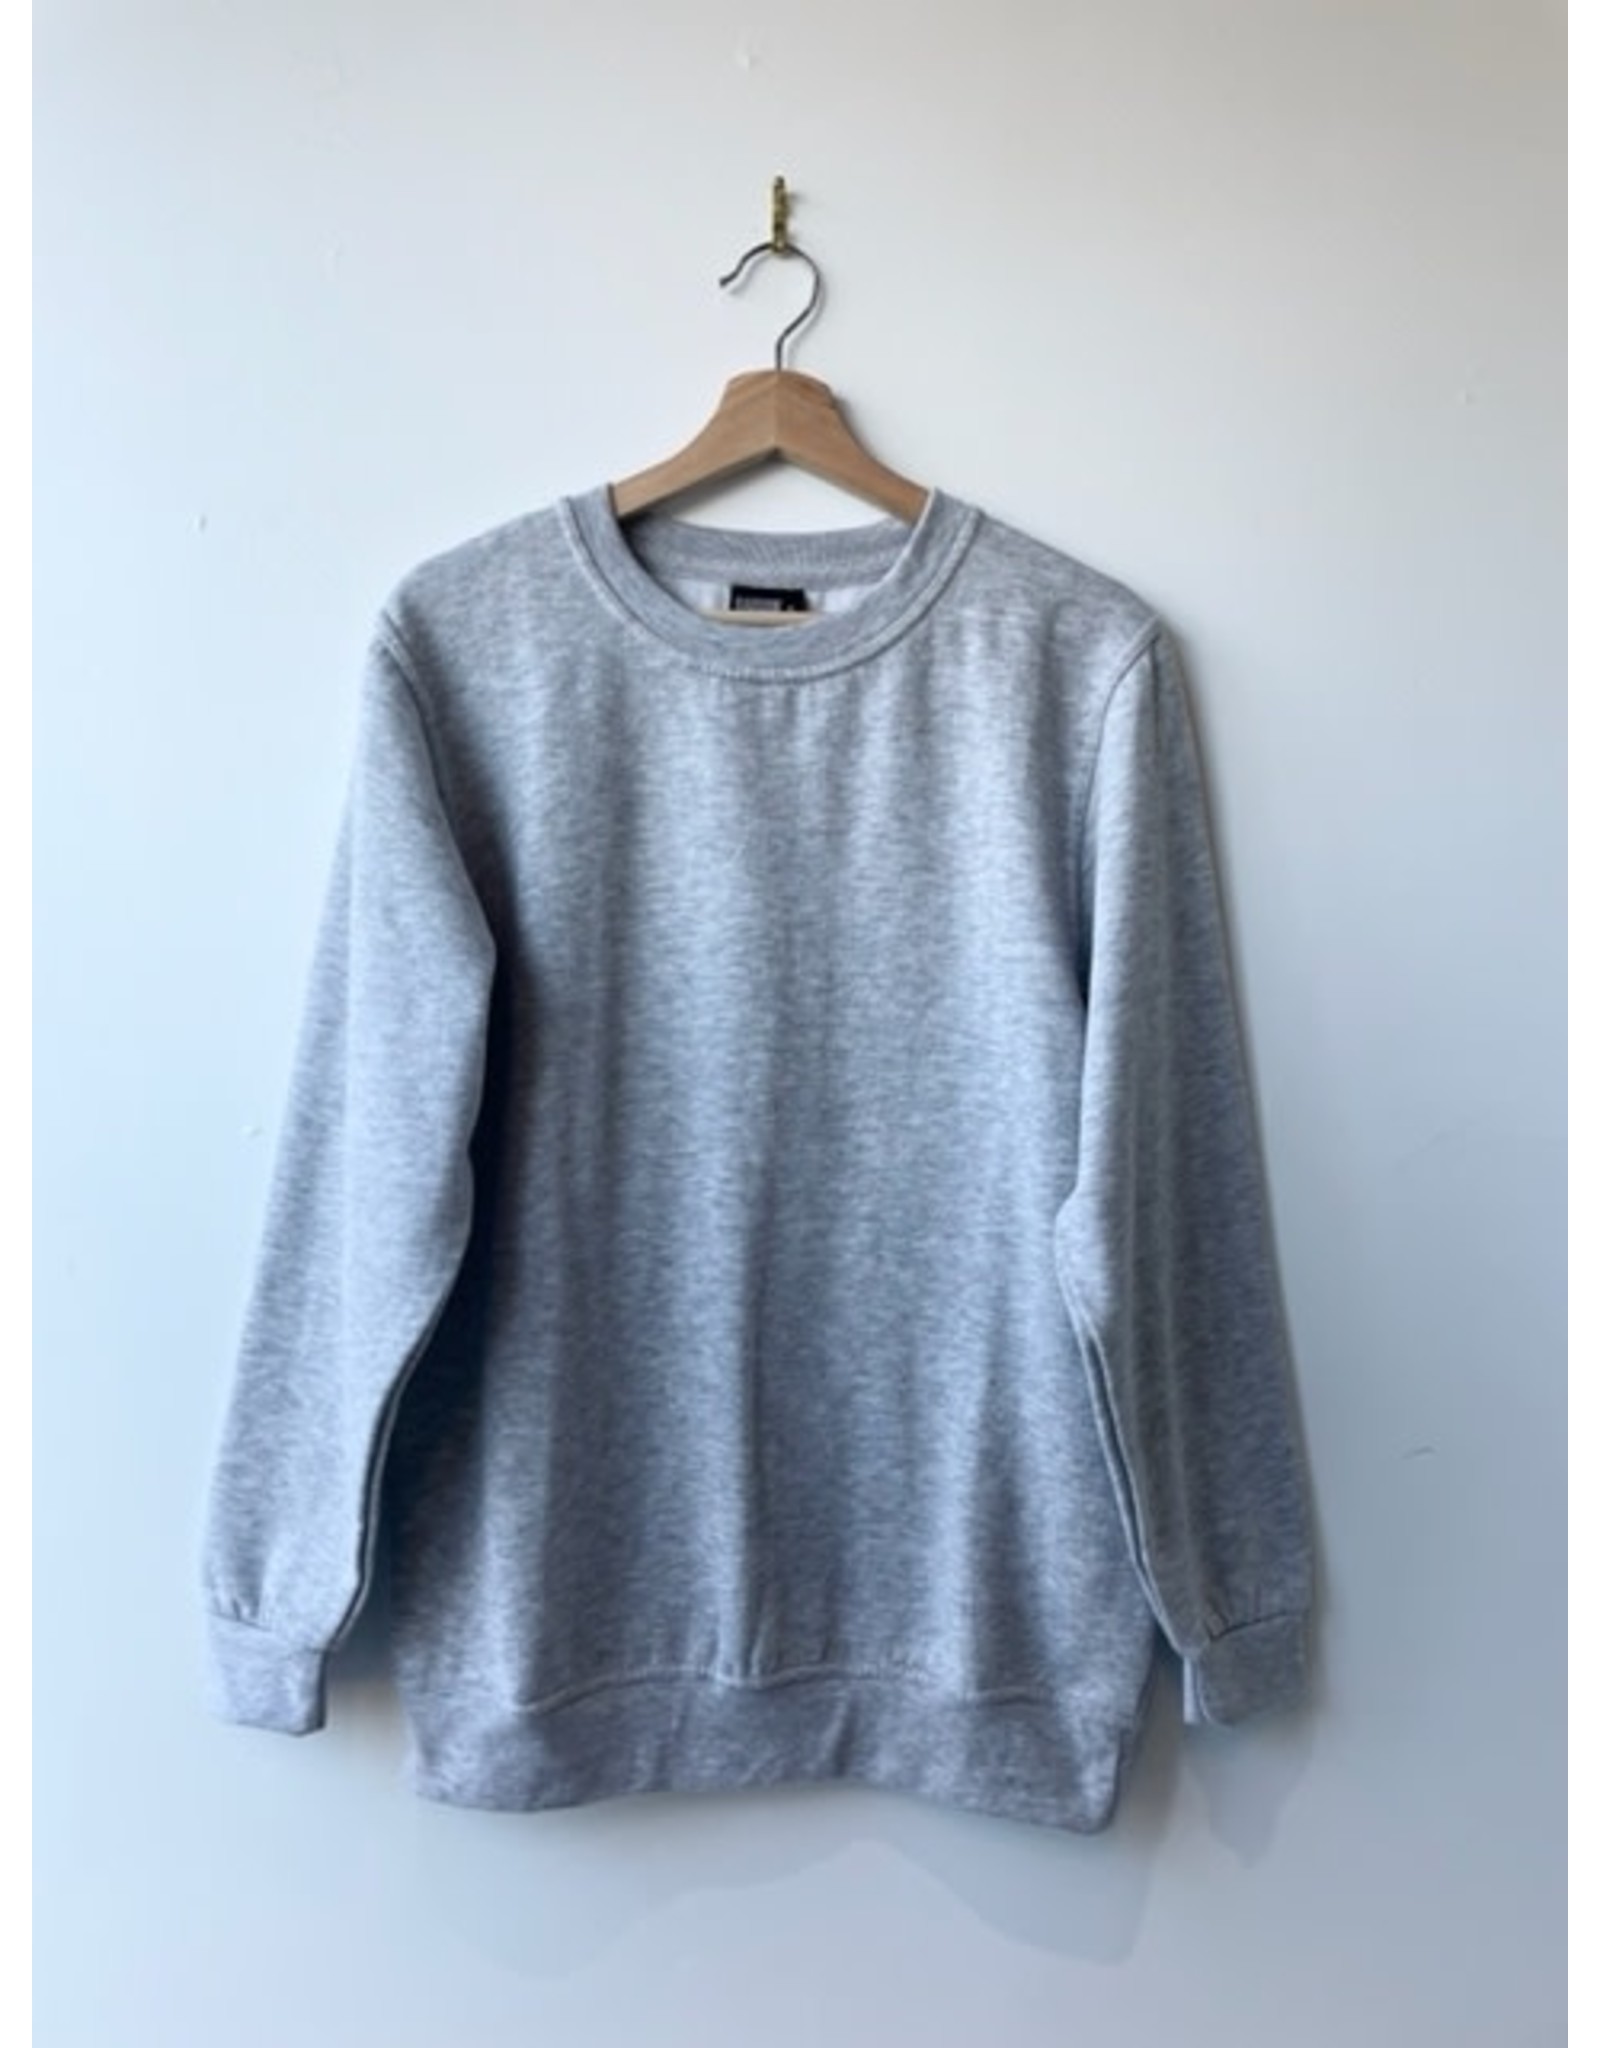 Wardon Radsow - Paris sweatshirt (heather grey)